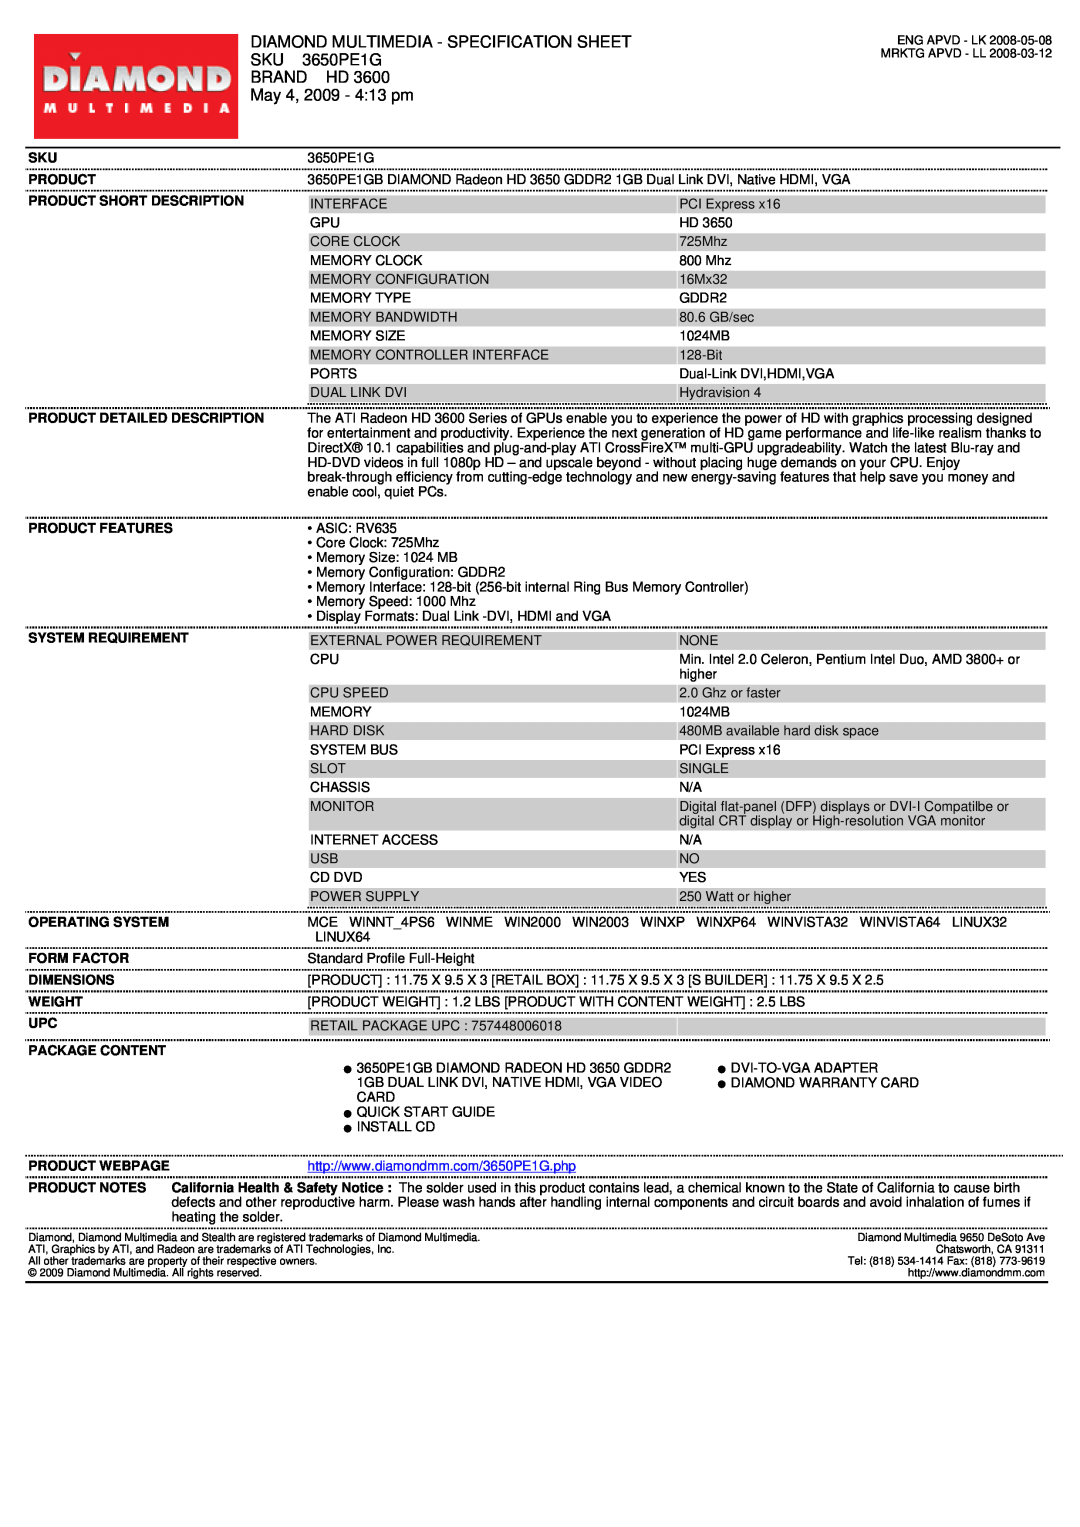 Diamond Multimedia SKU 3650PE1G specifications Diamond Multimedia - Specification Sheet, Brand Hd, May 4, 2009 - 413 pm 